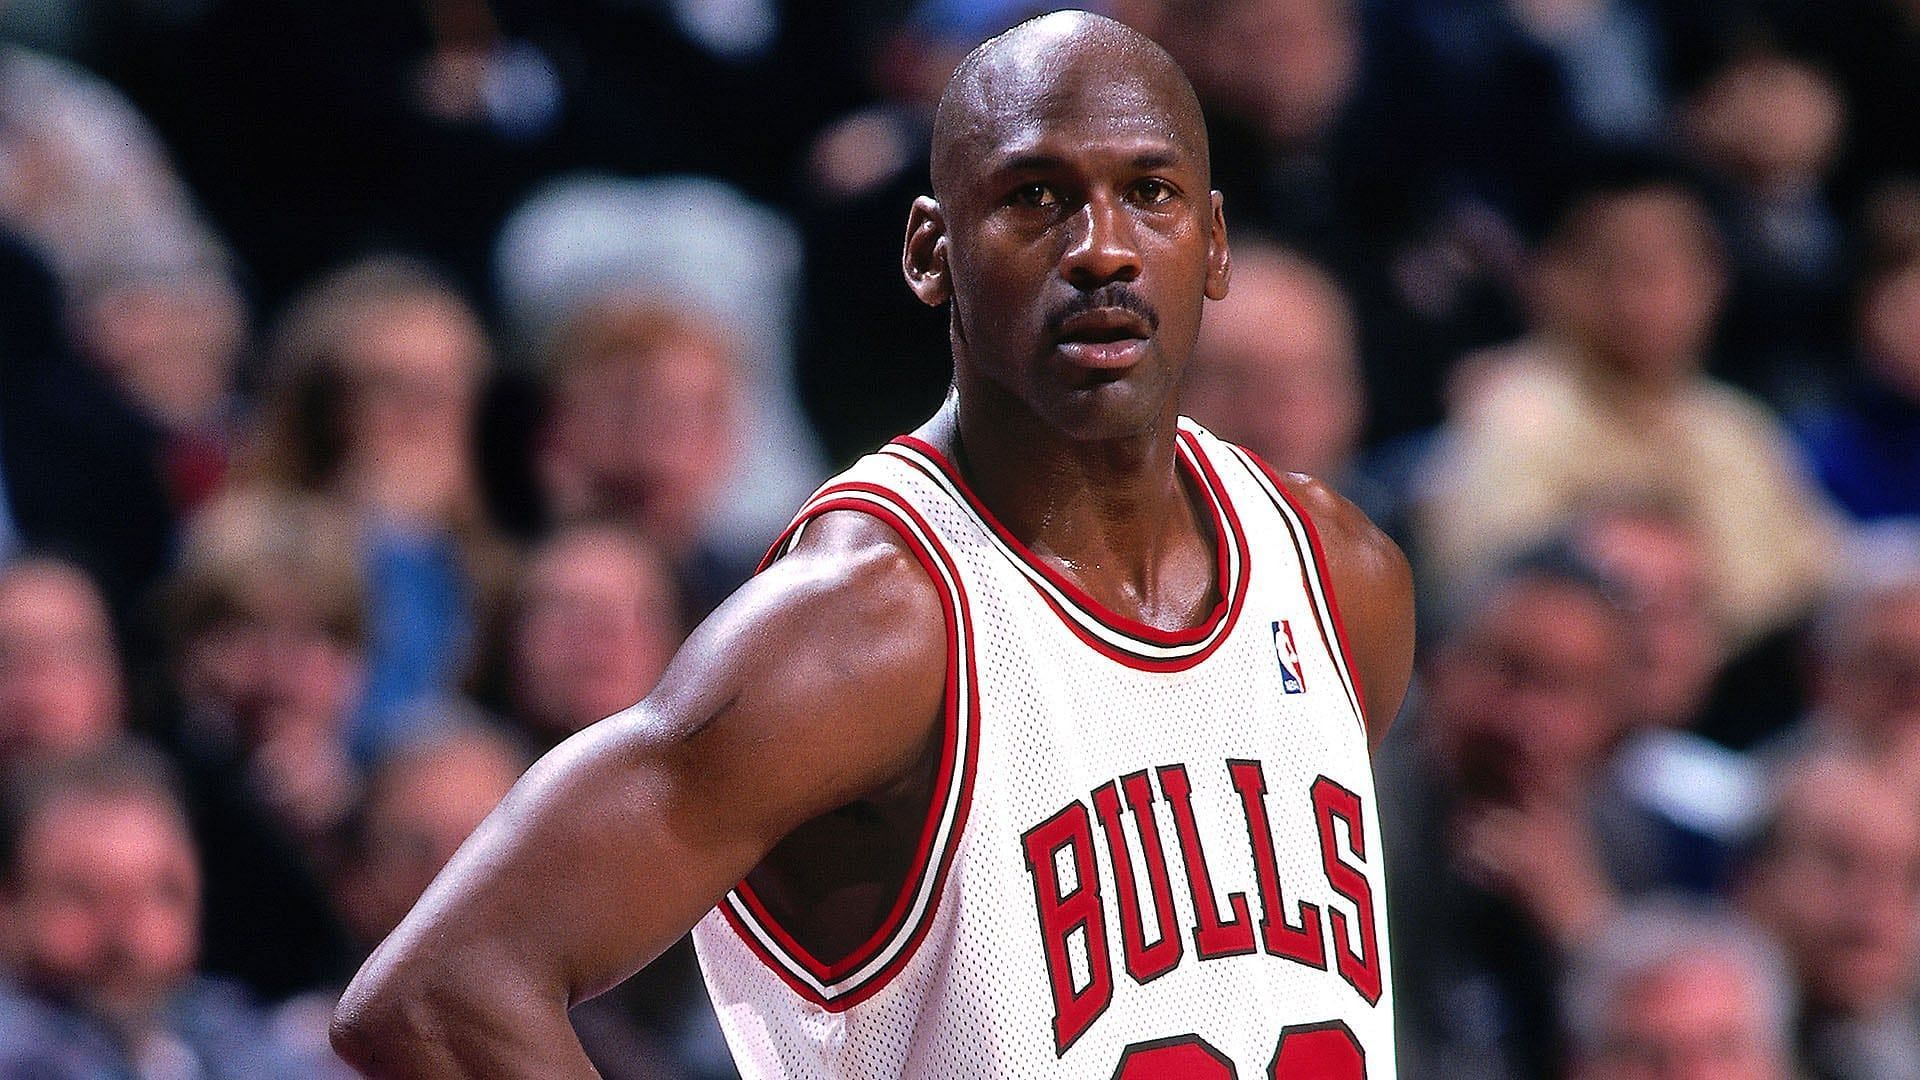 Bulls and NBA legend Michael Jordan